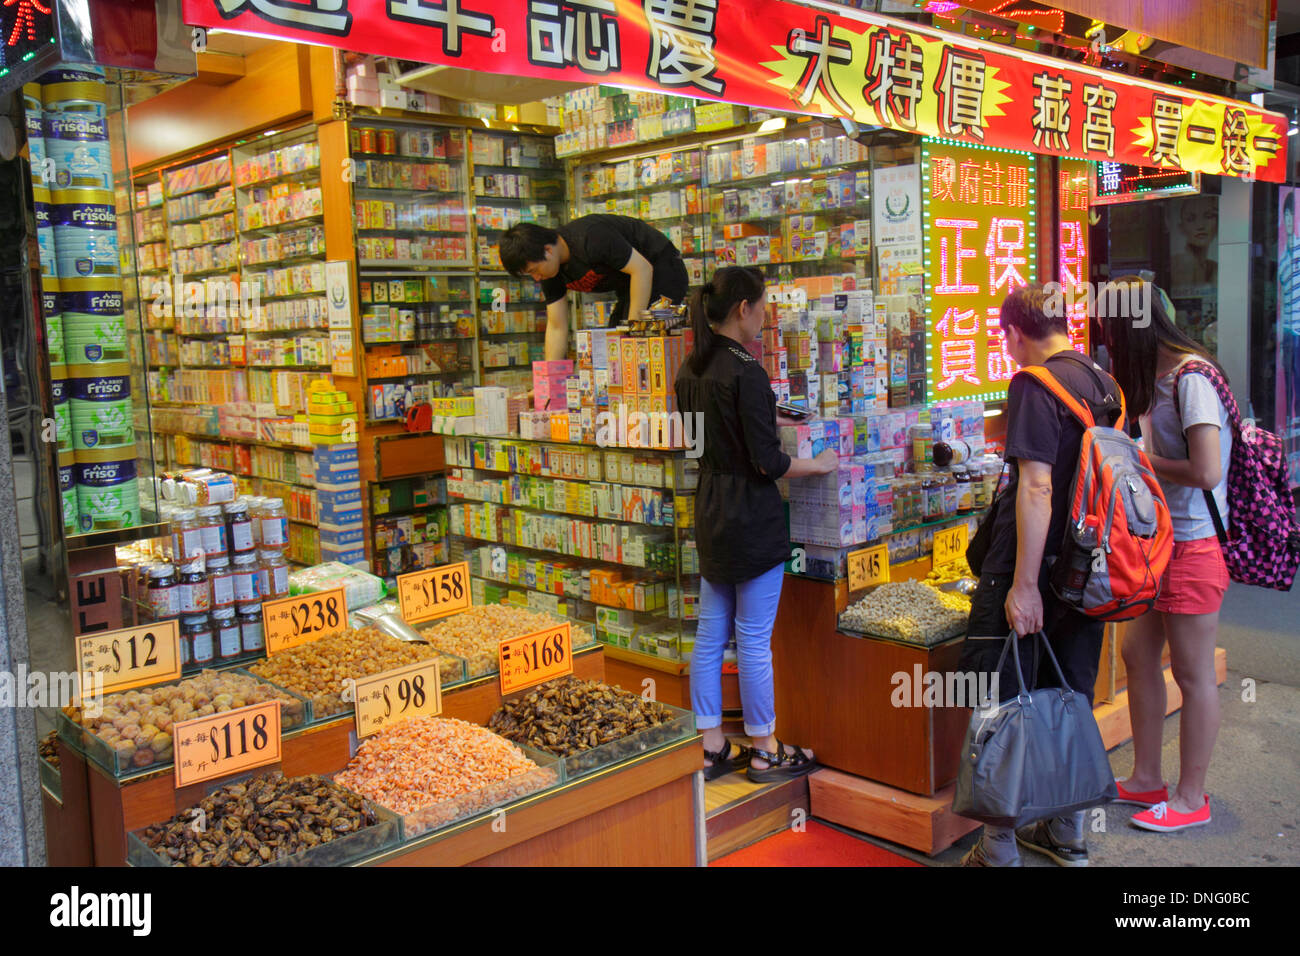 Hong Kong China,HK,Asia,Chinese,Oriental,Kowloon,Tsim Sha Tsui,Nathan Road,shopping shopper shoppers shop shops market markets marketplace buying sell Stock Photo